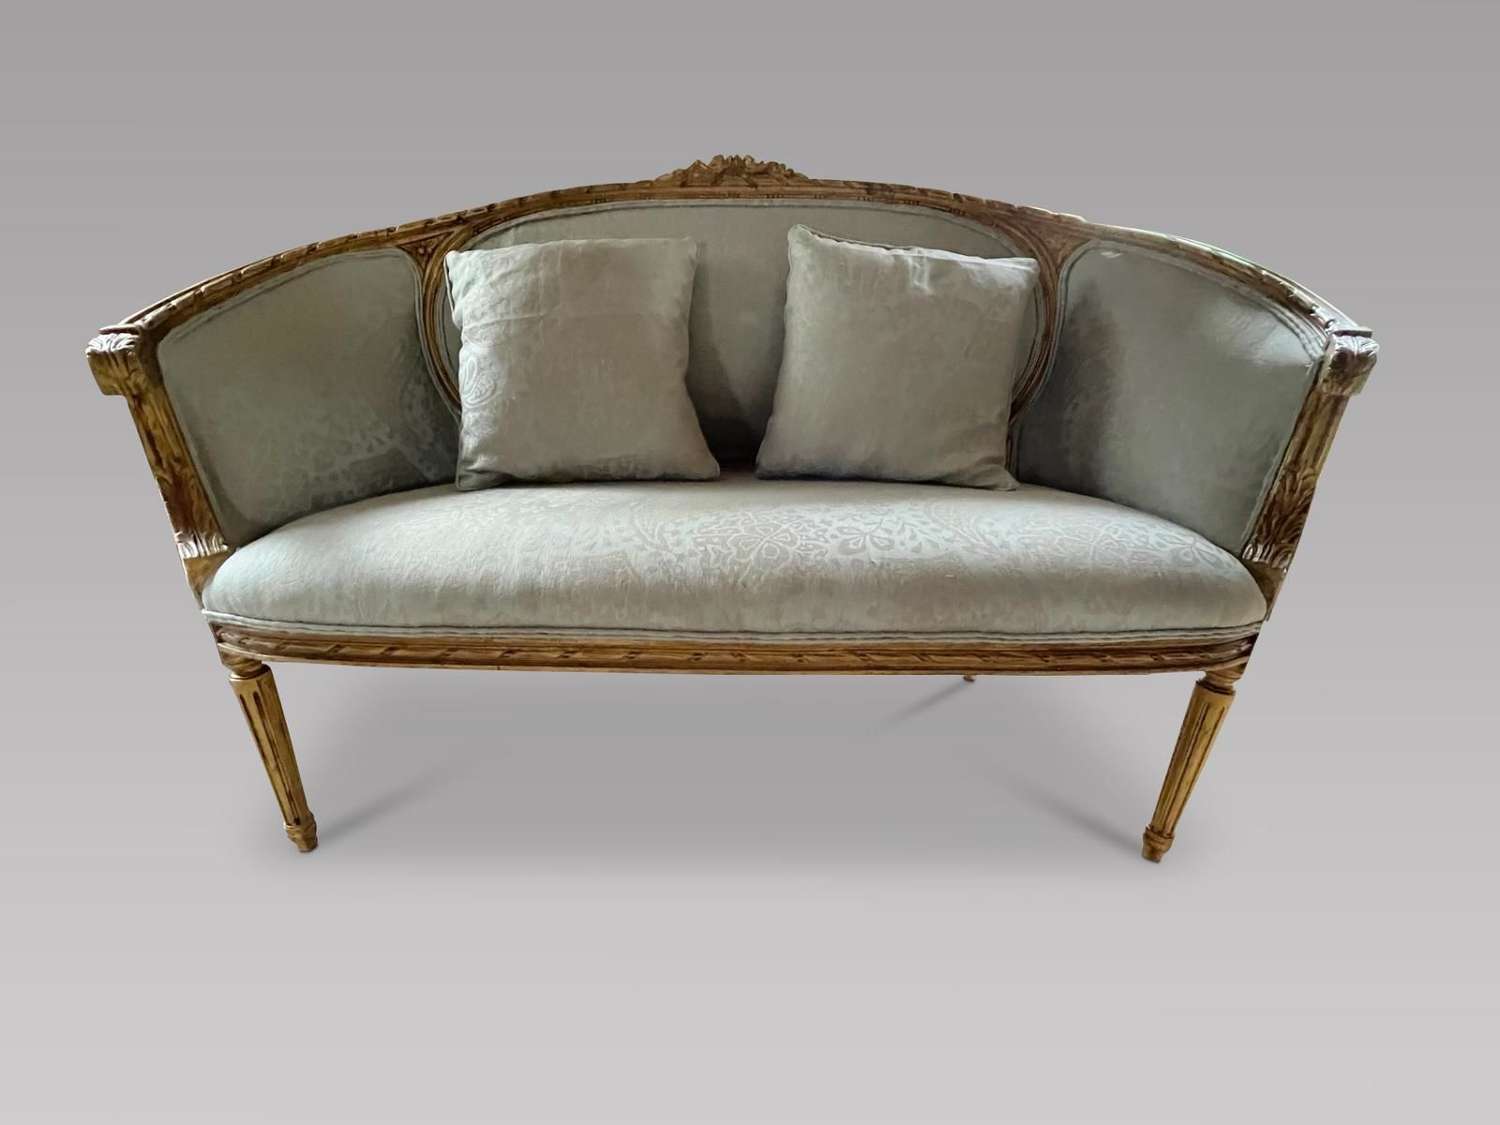 19th Century Salon Sofa in Louis XVI Style